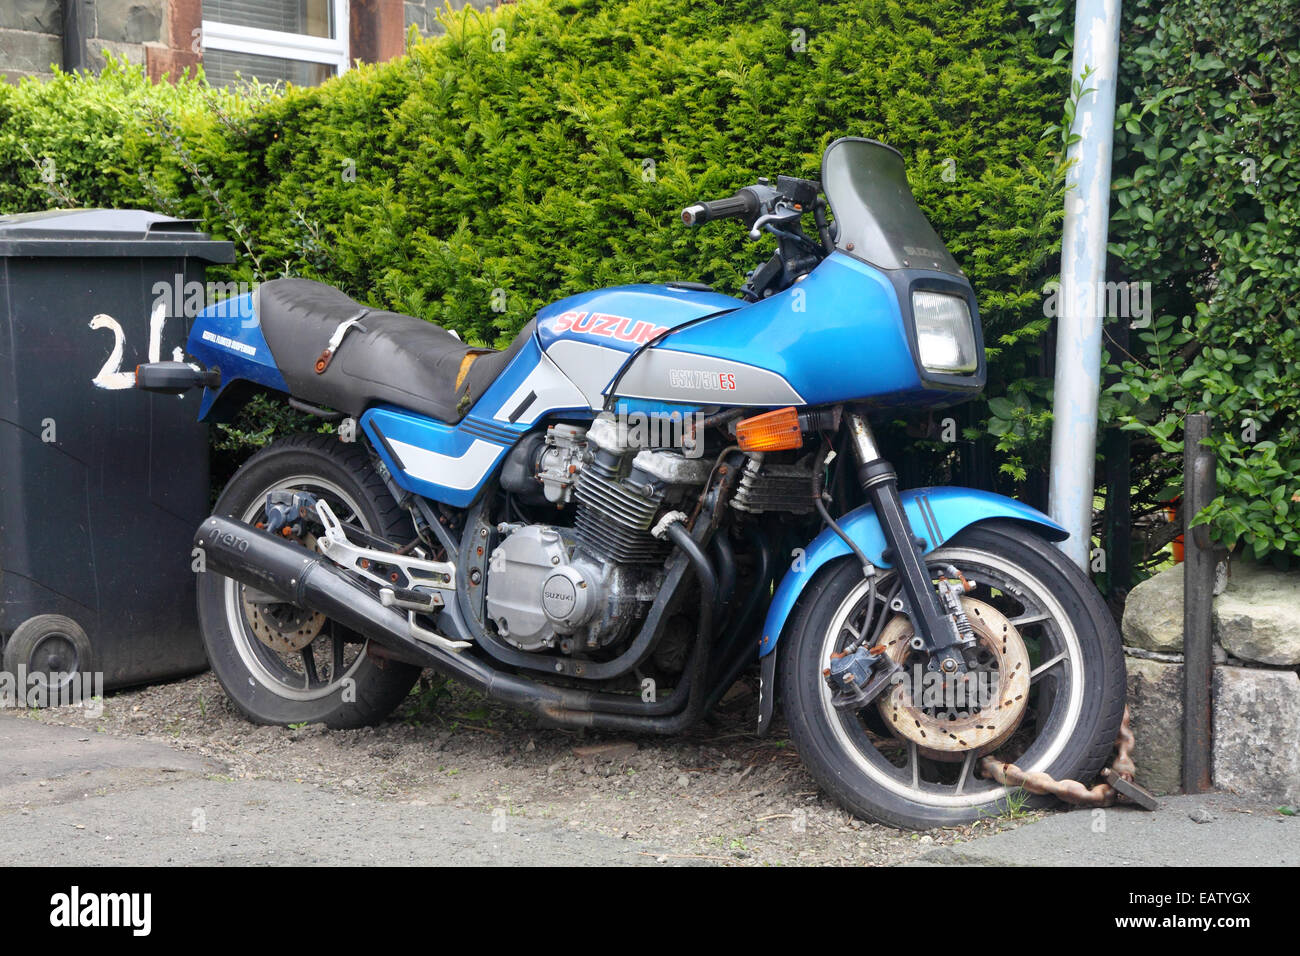 Ancienne moto Suzuki, enchaînés à la lampe-post Photo Stock - Alamy